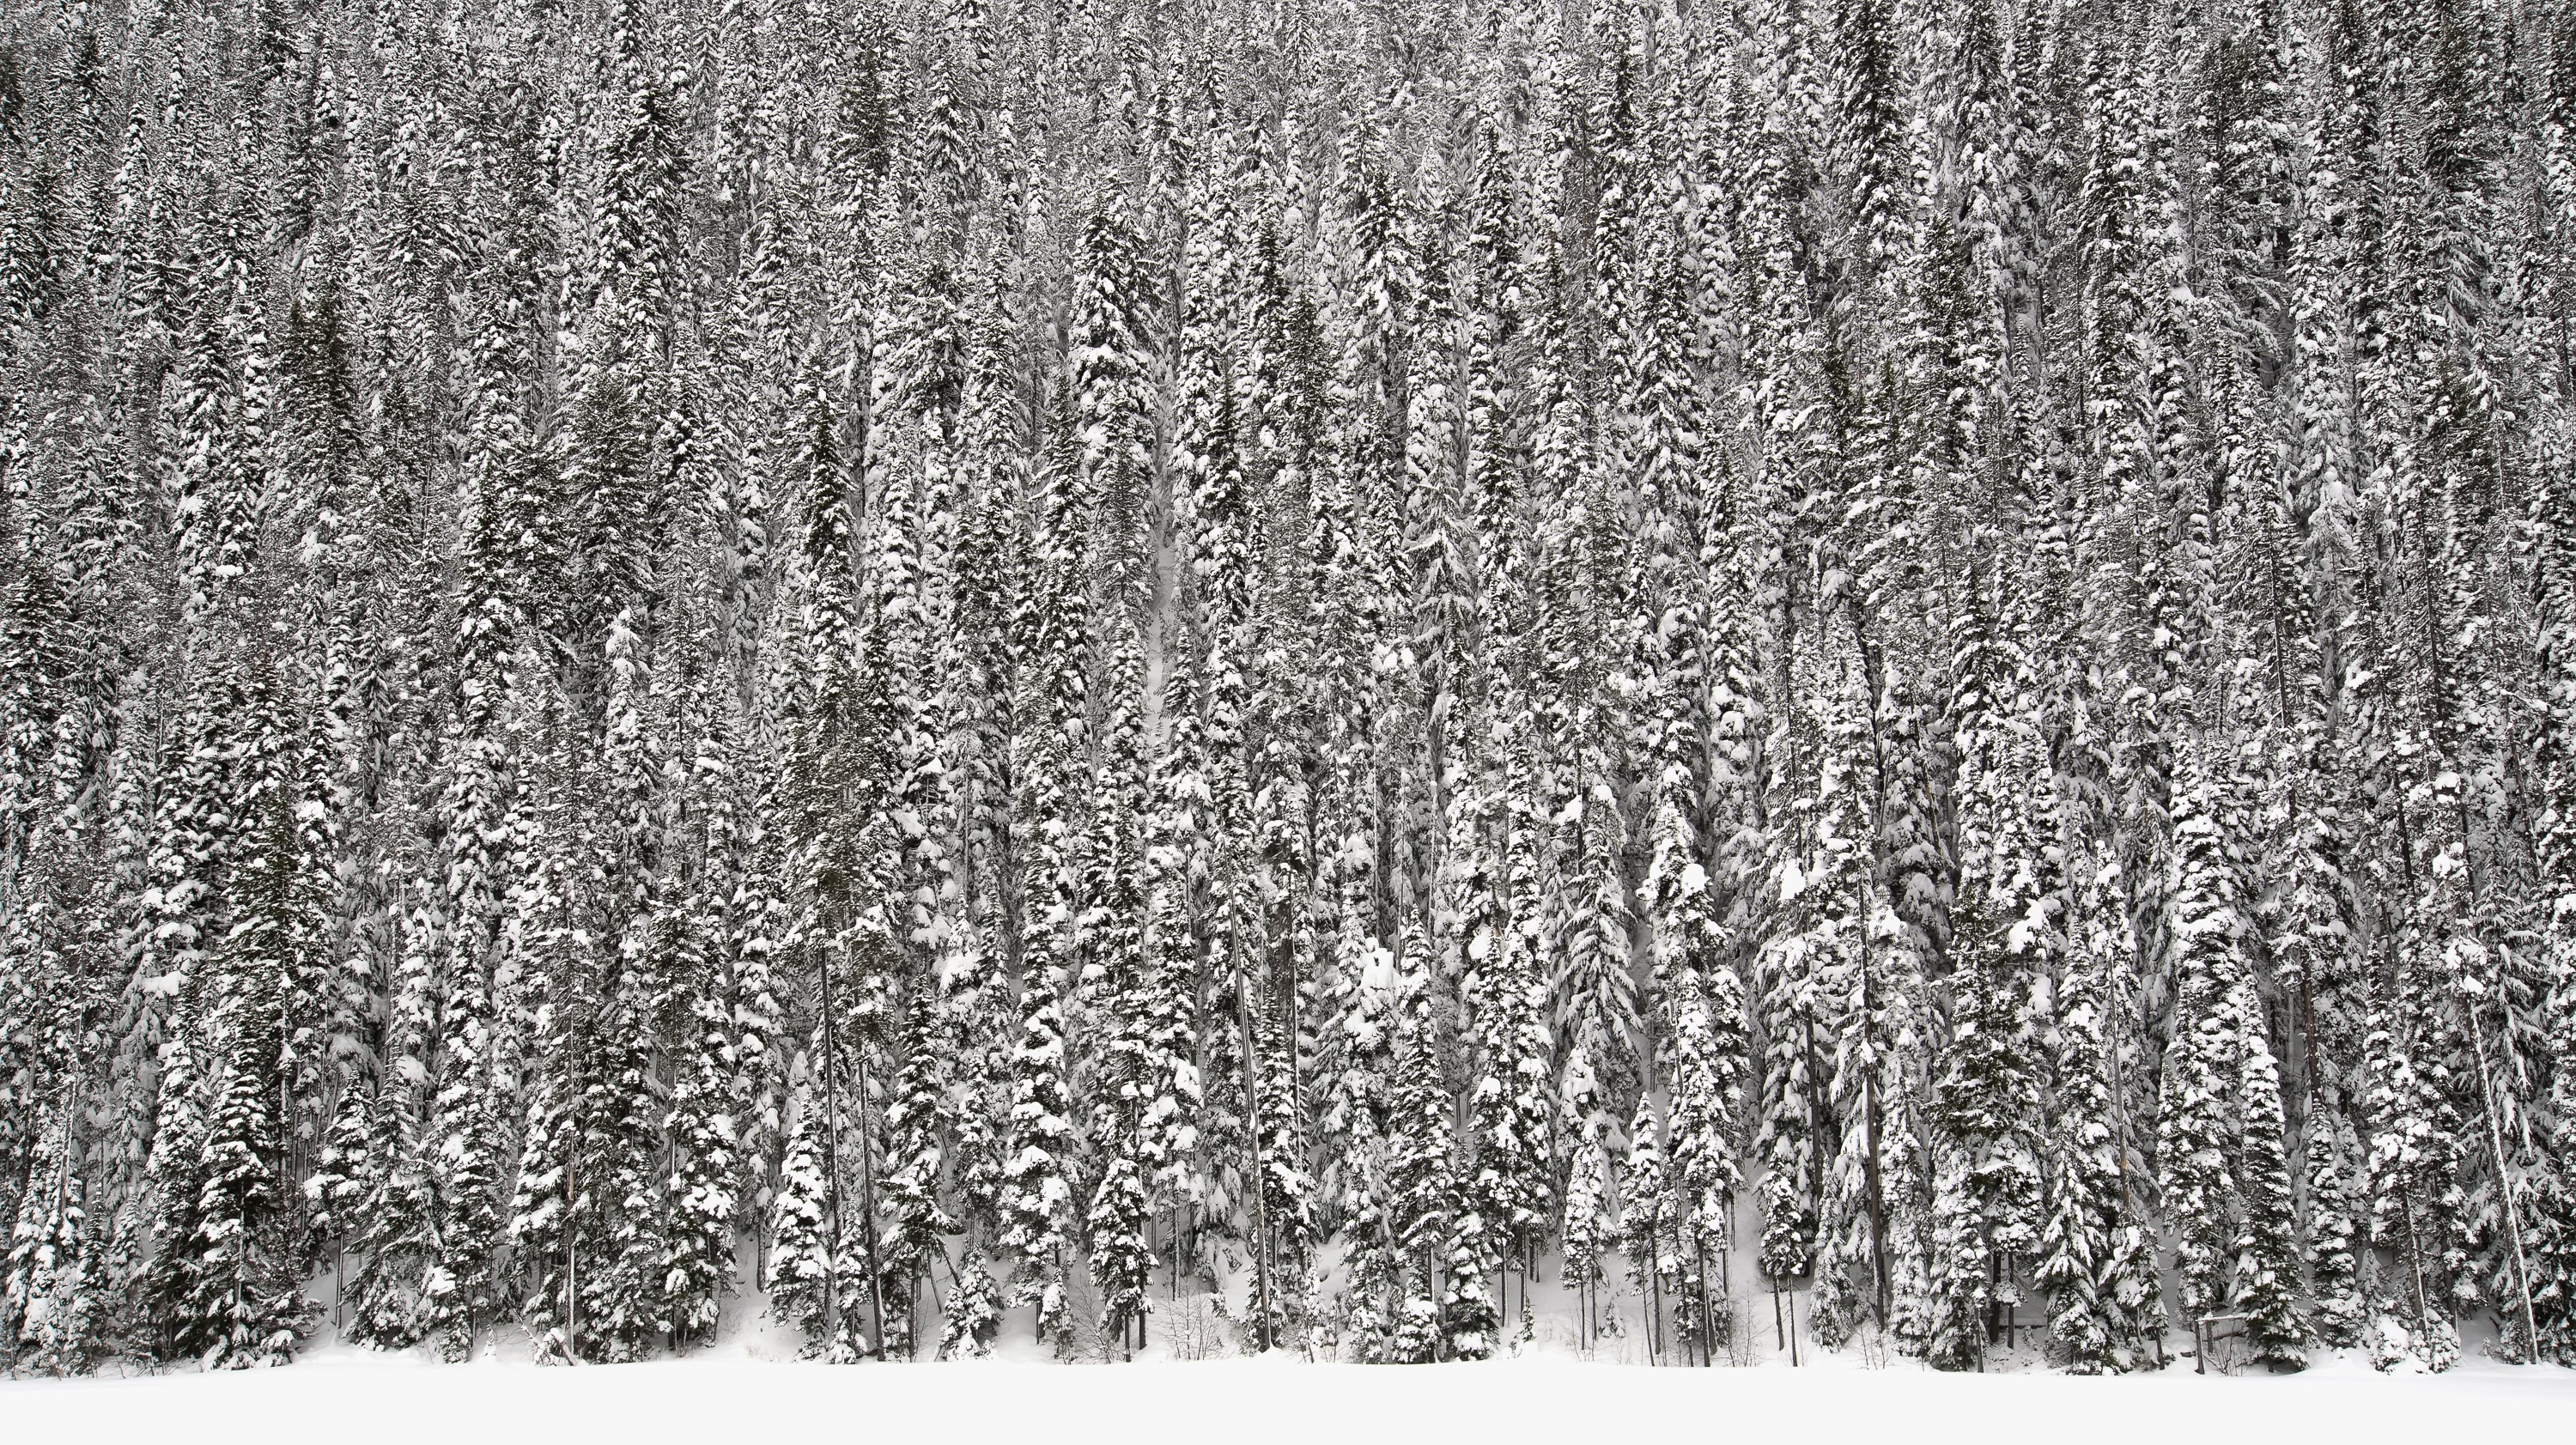 'backgrounds/WinterTrees.jpg'